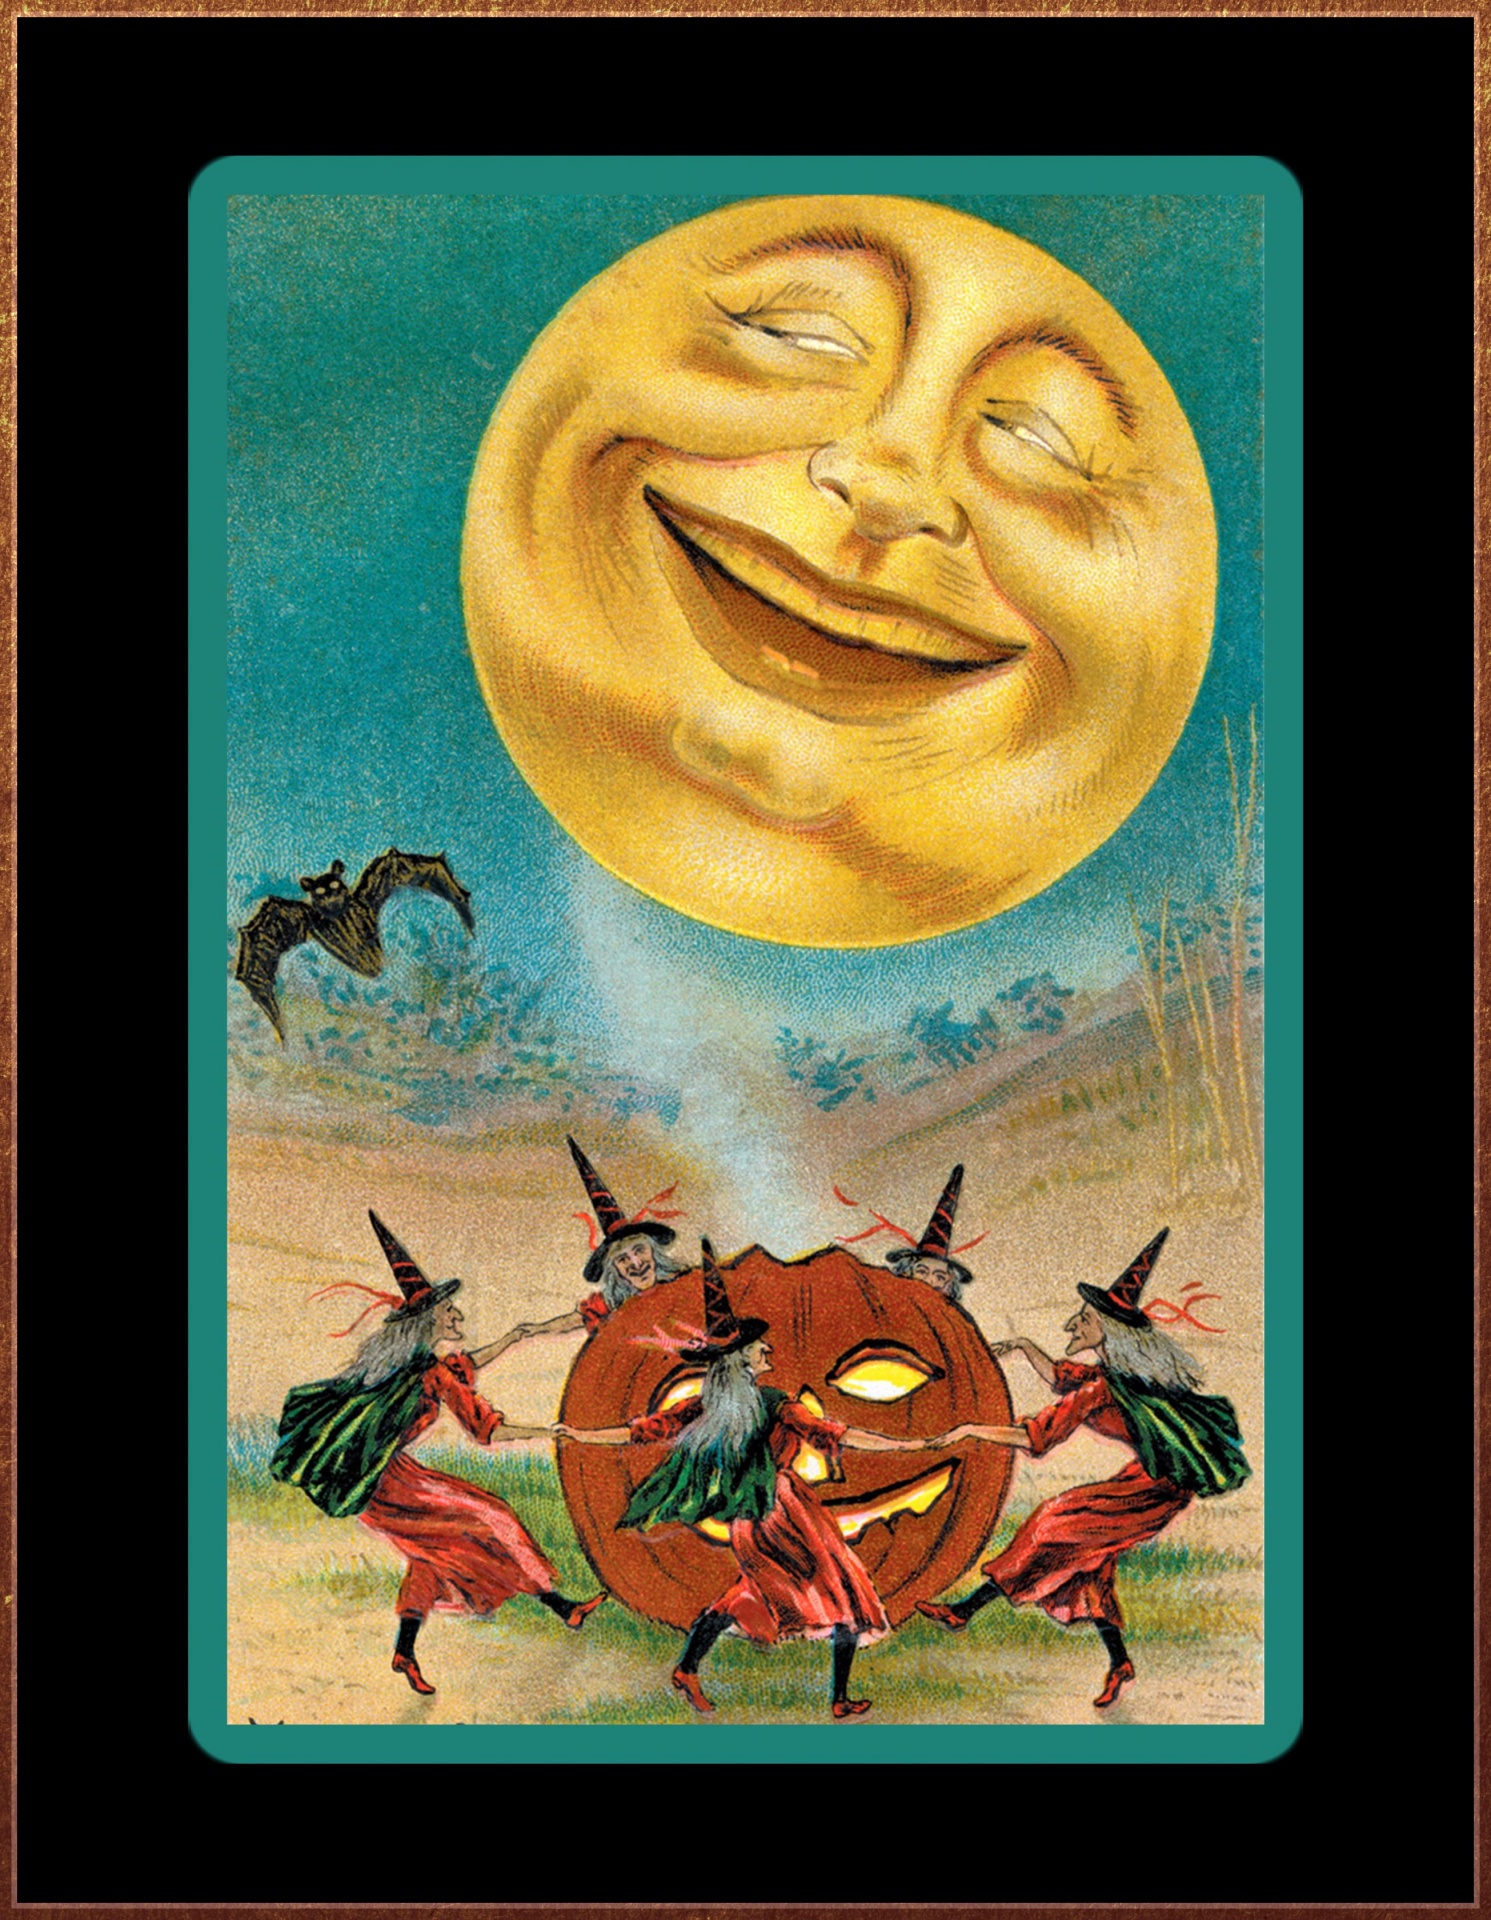 Vintage Halloween Illustration